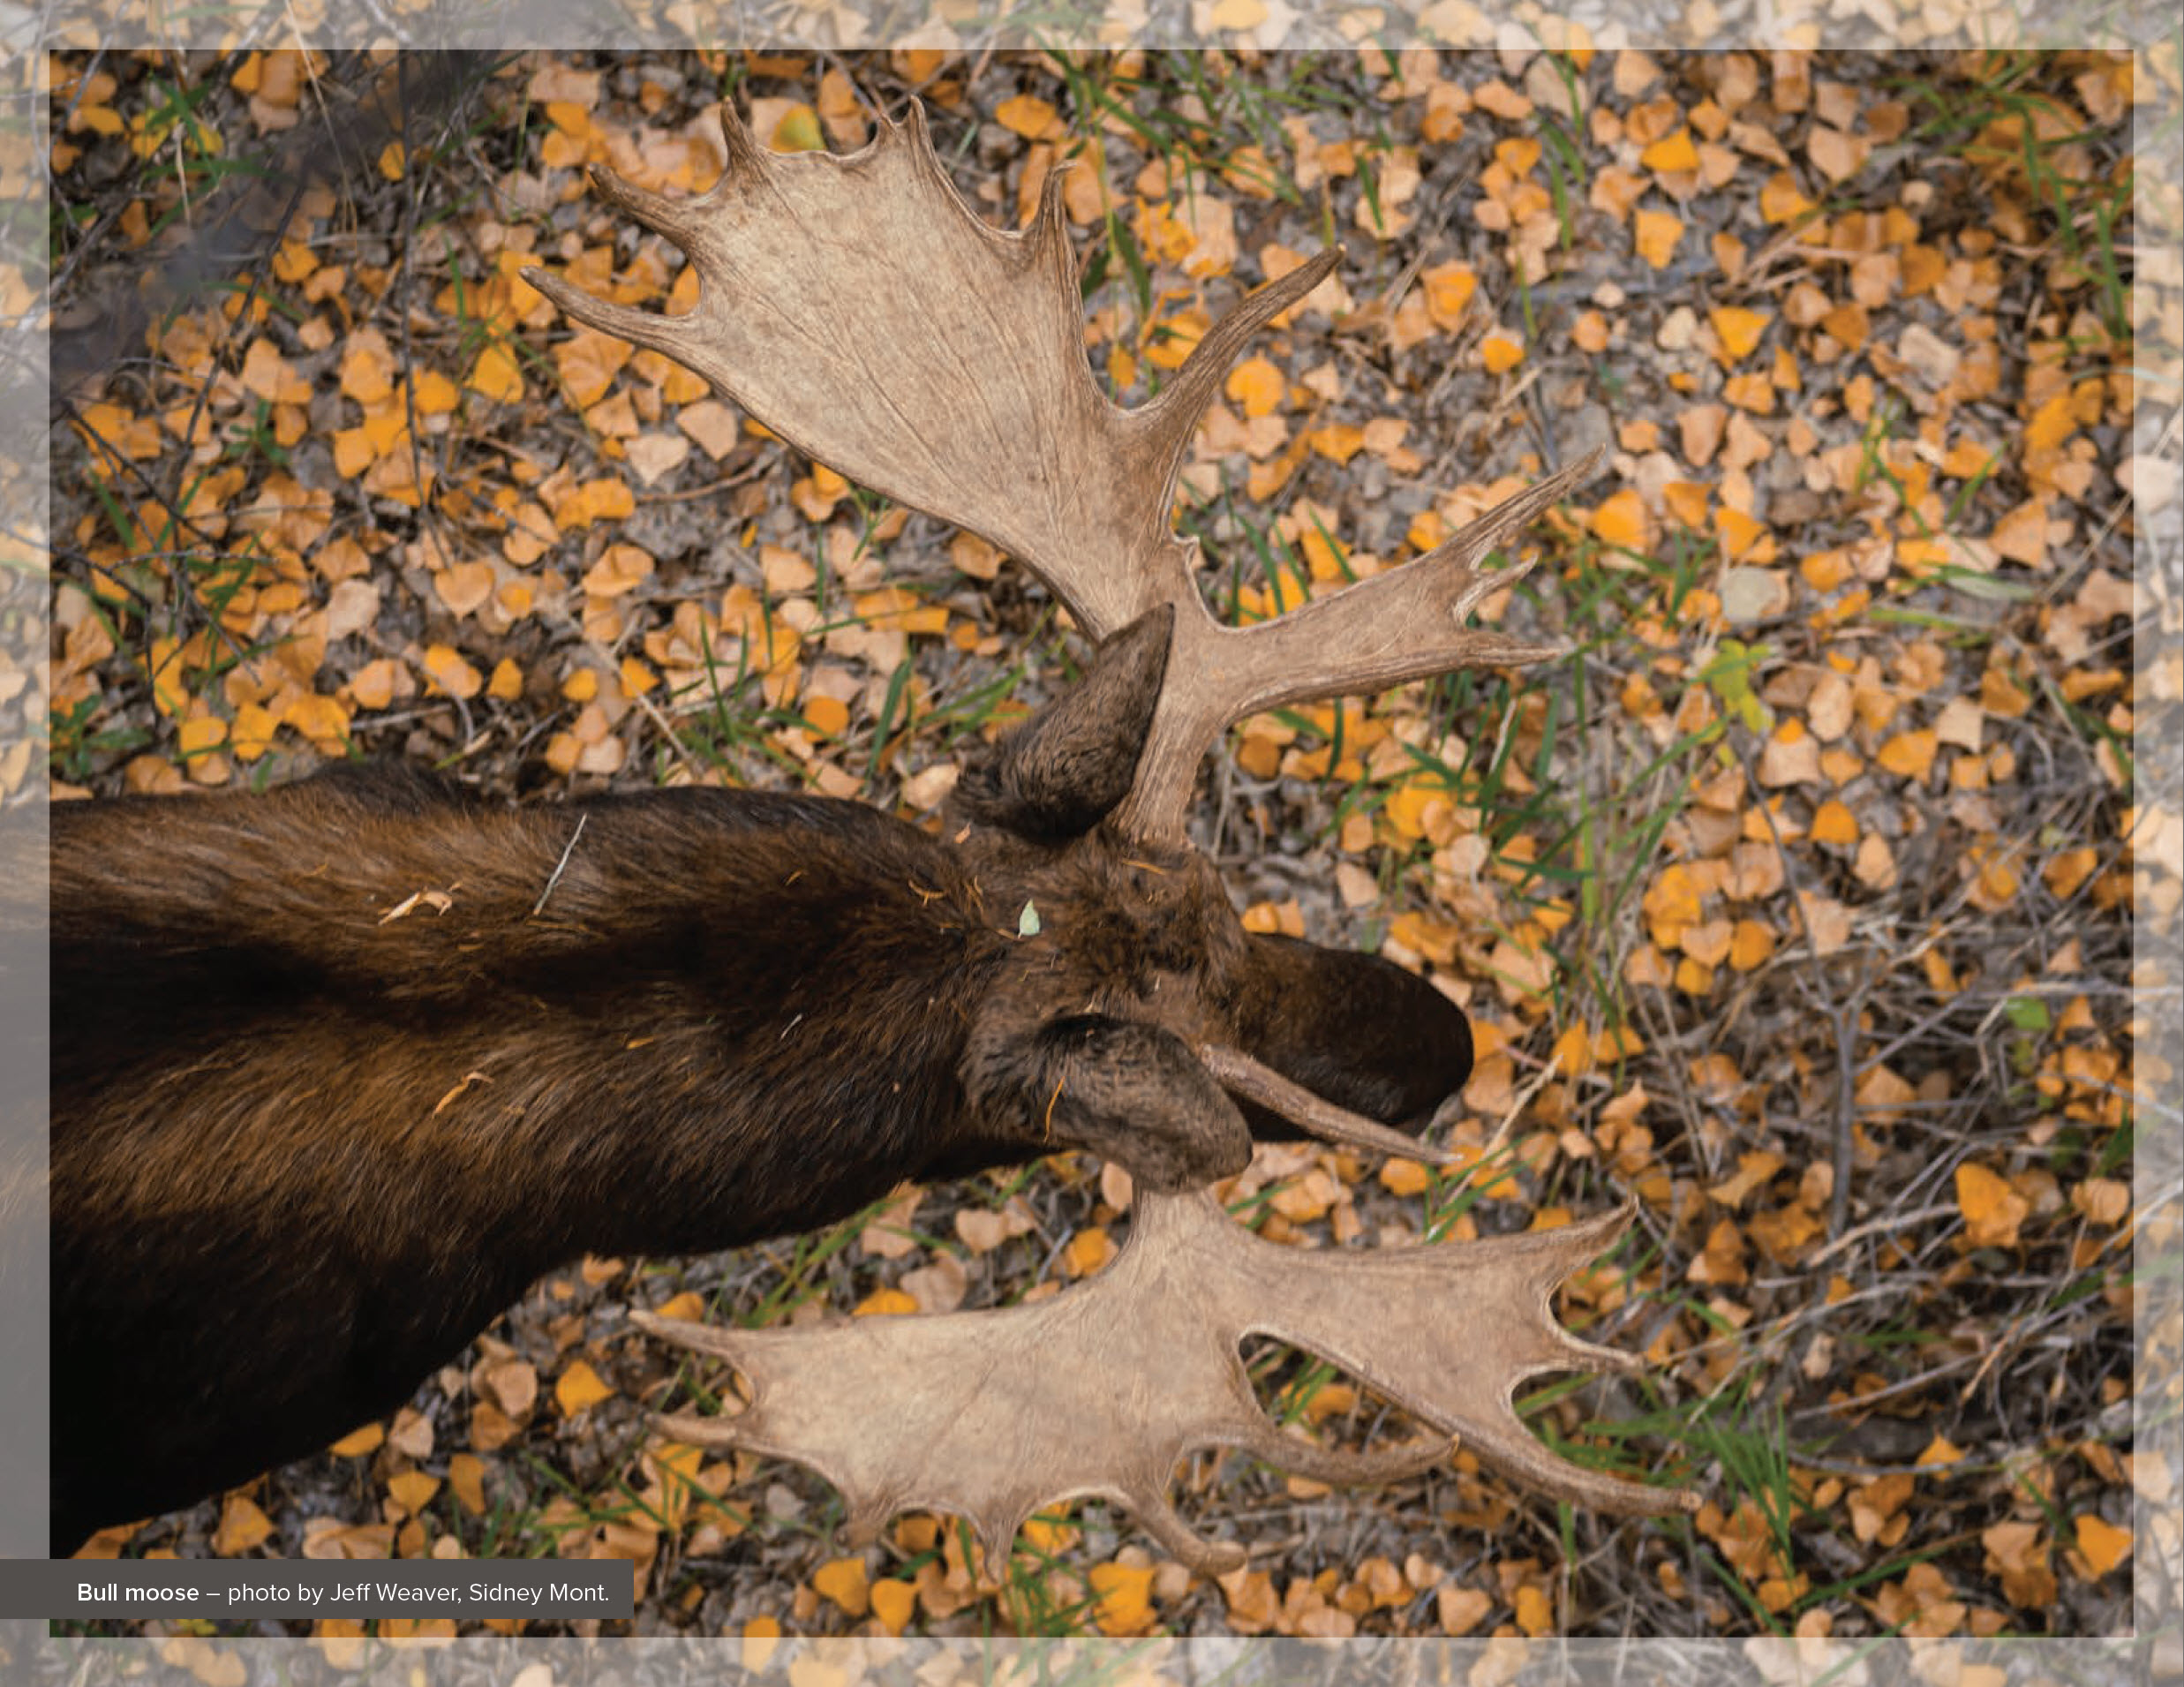 Bull moose – photo by Jeff Weaver, Sidney Mont.